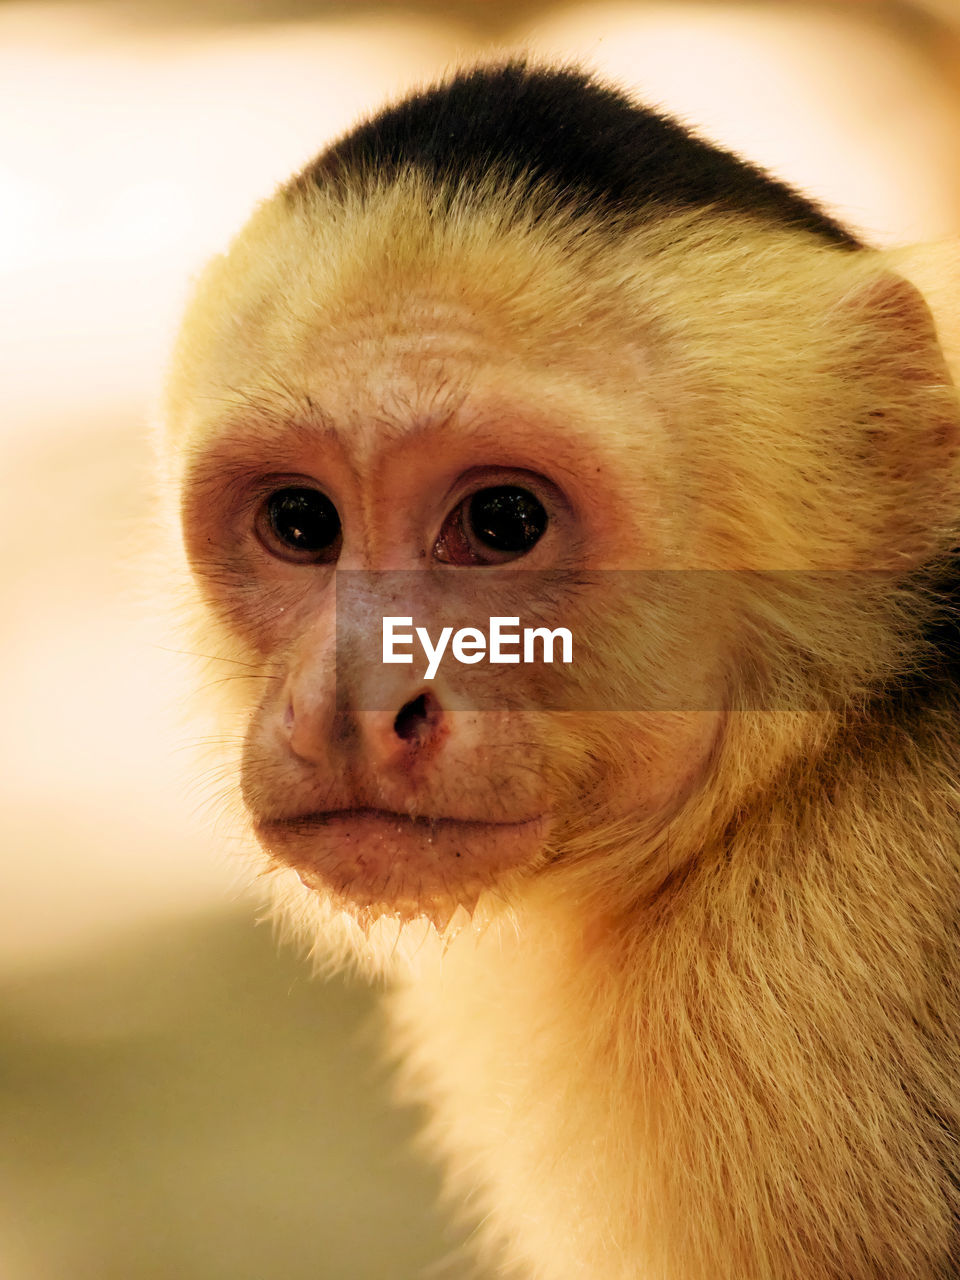 Close-up portrait of a capuchin monkey